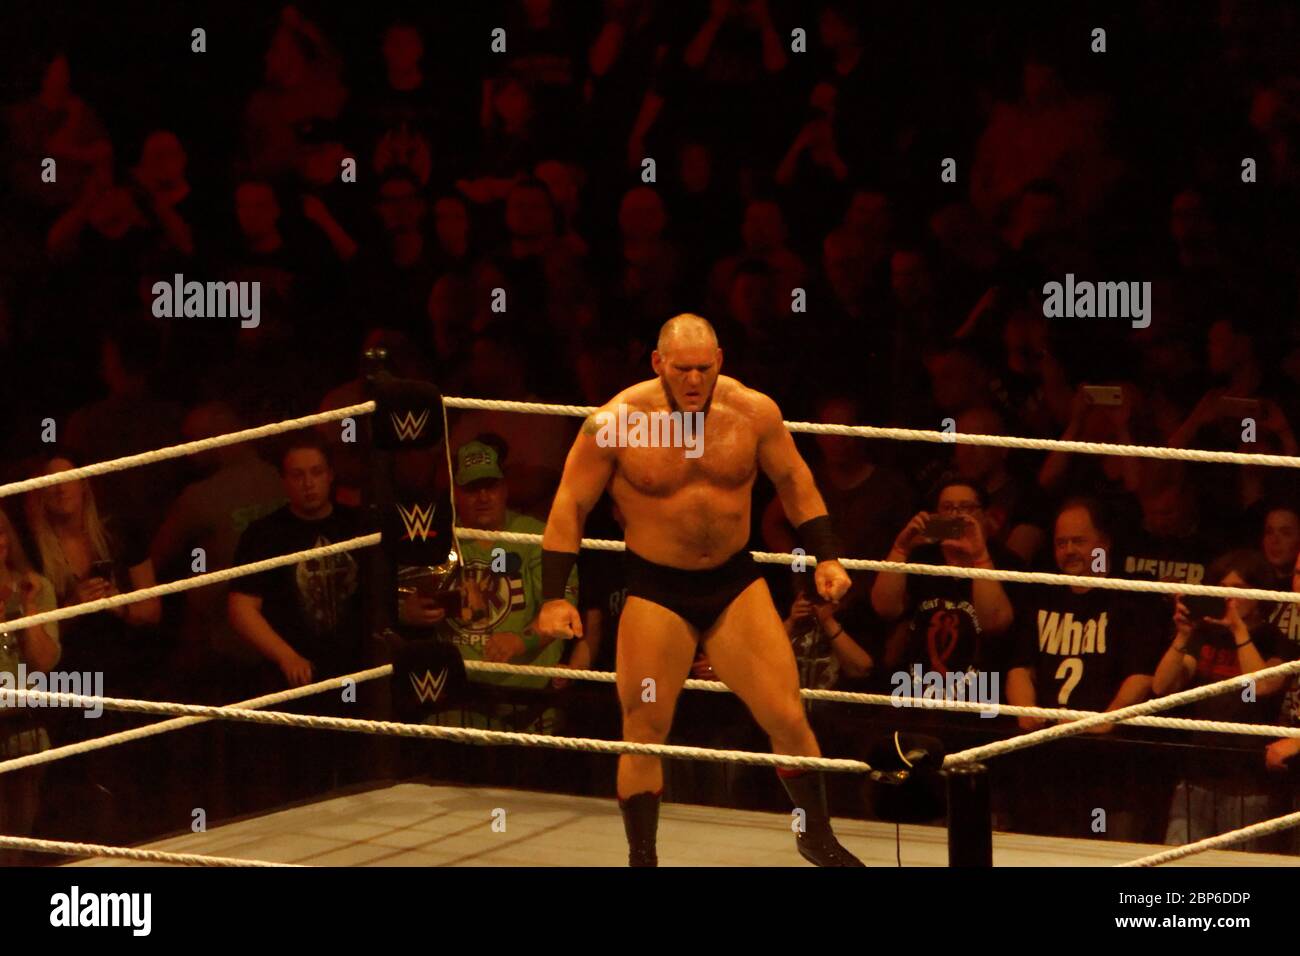 Das WWE Live Event 'SmackDown Live' in Hamburg Hamburg, Deutschland - 16. Mai 2019: Stockfoto